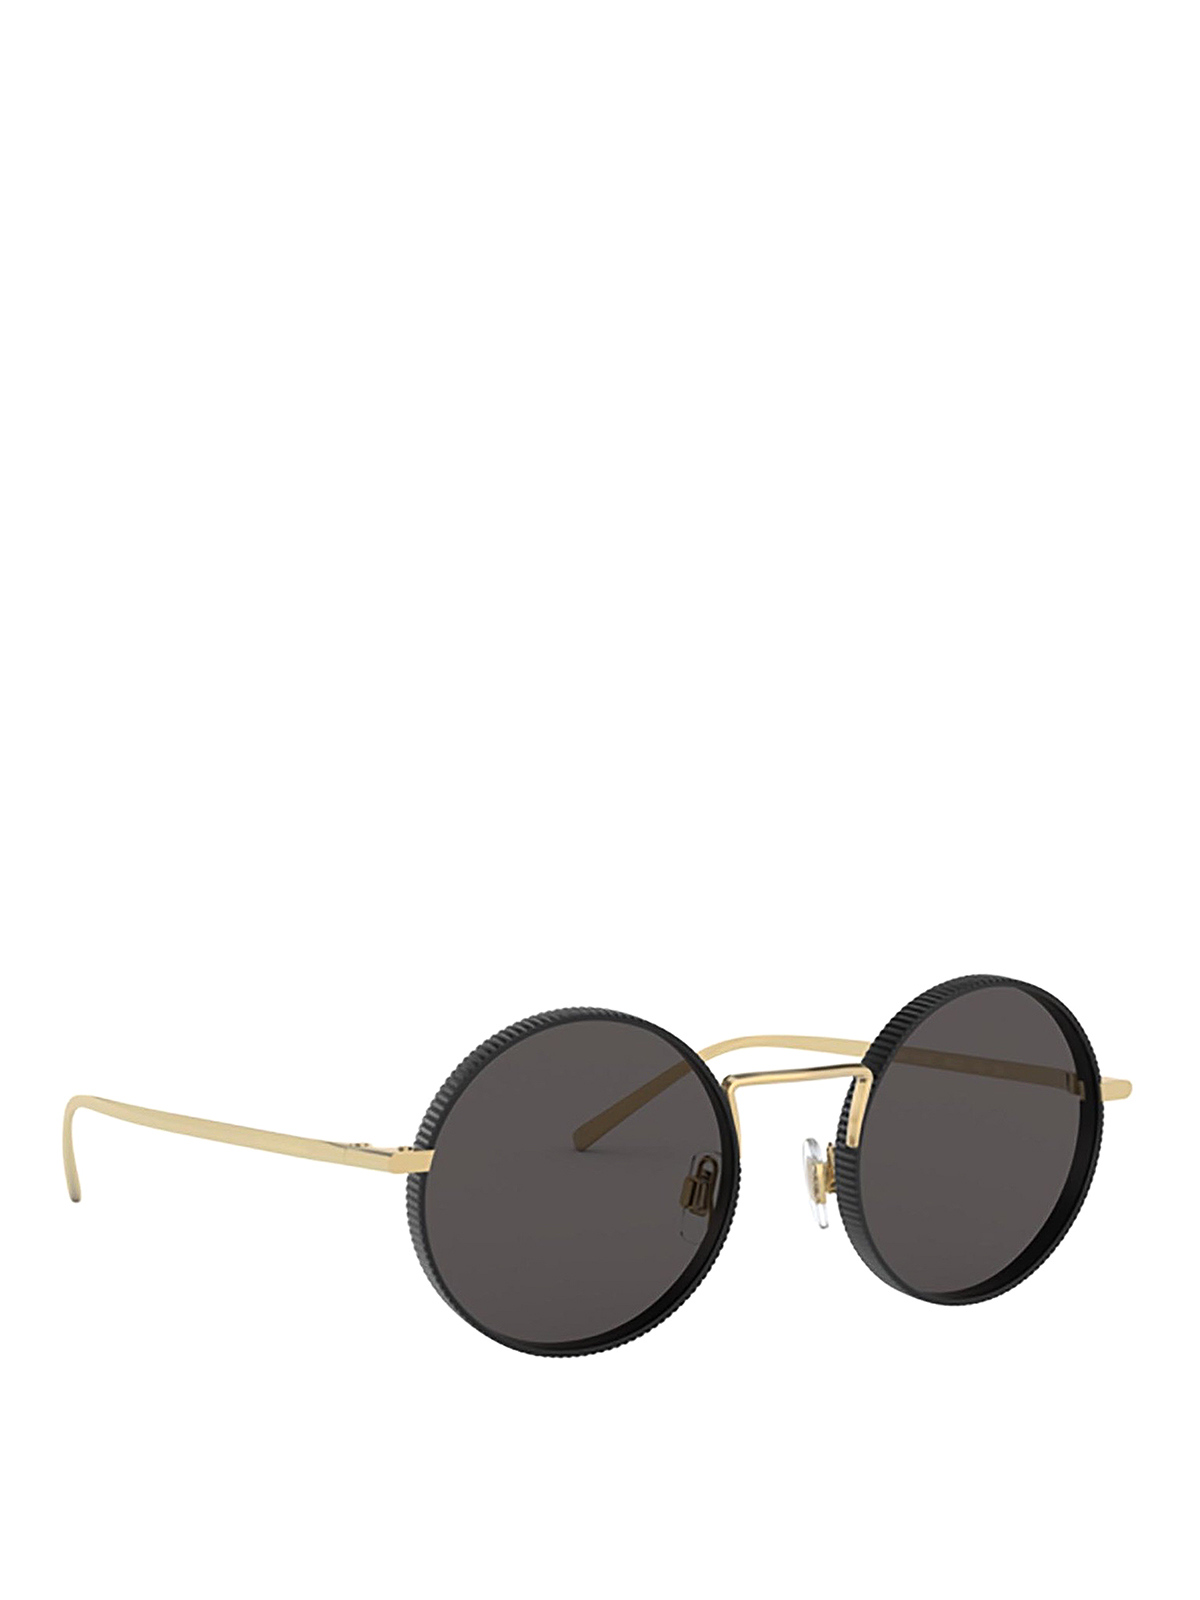 Sunglasses Dolce & Gabbana - Knurled round sunglasses - DG2246131187